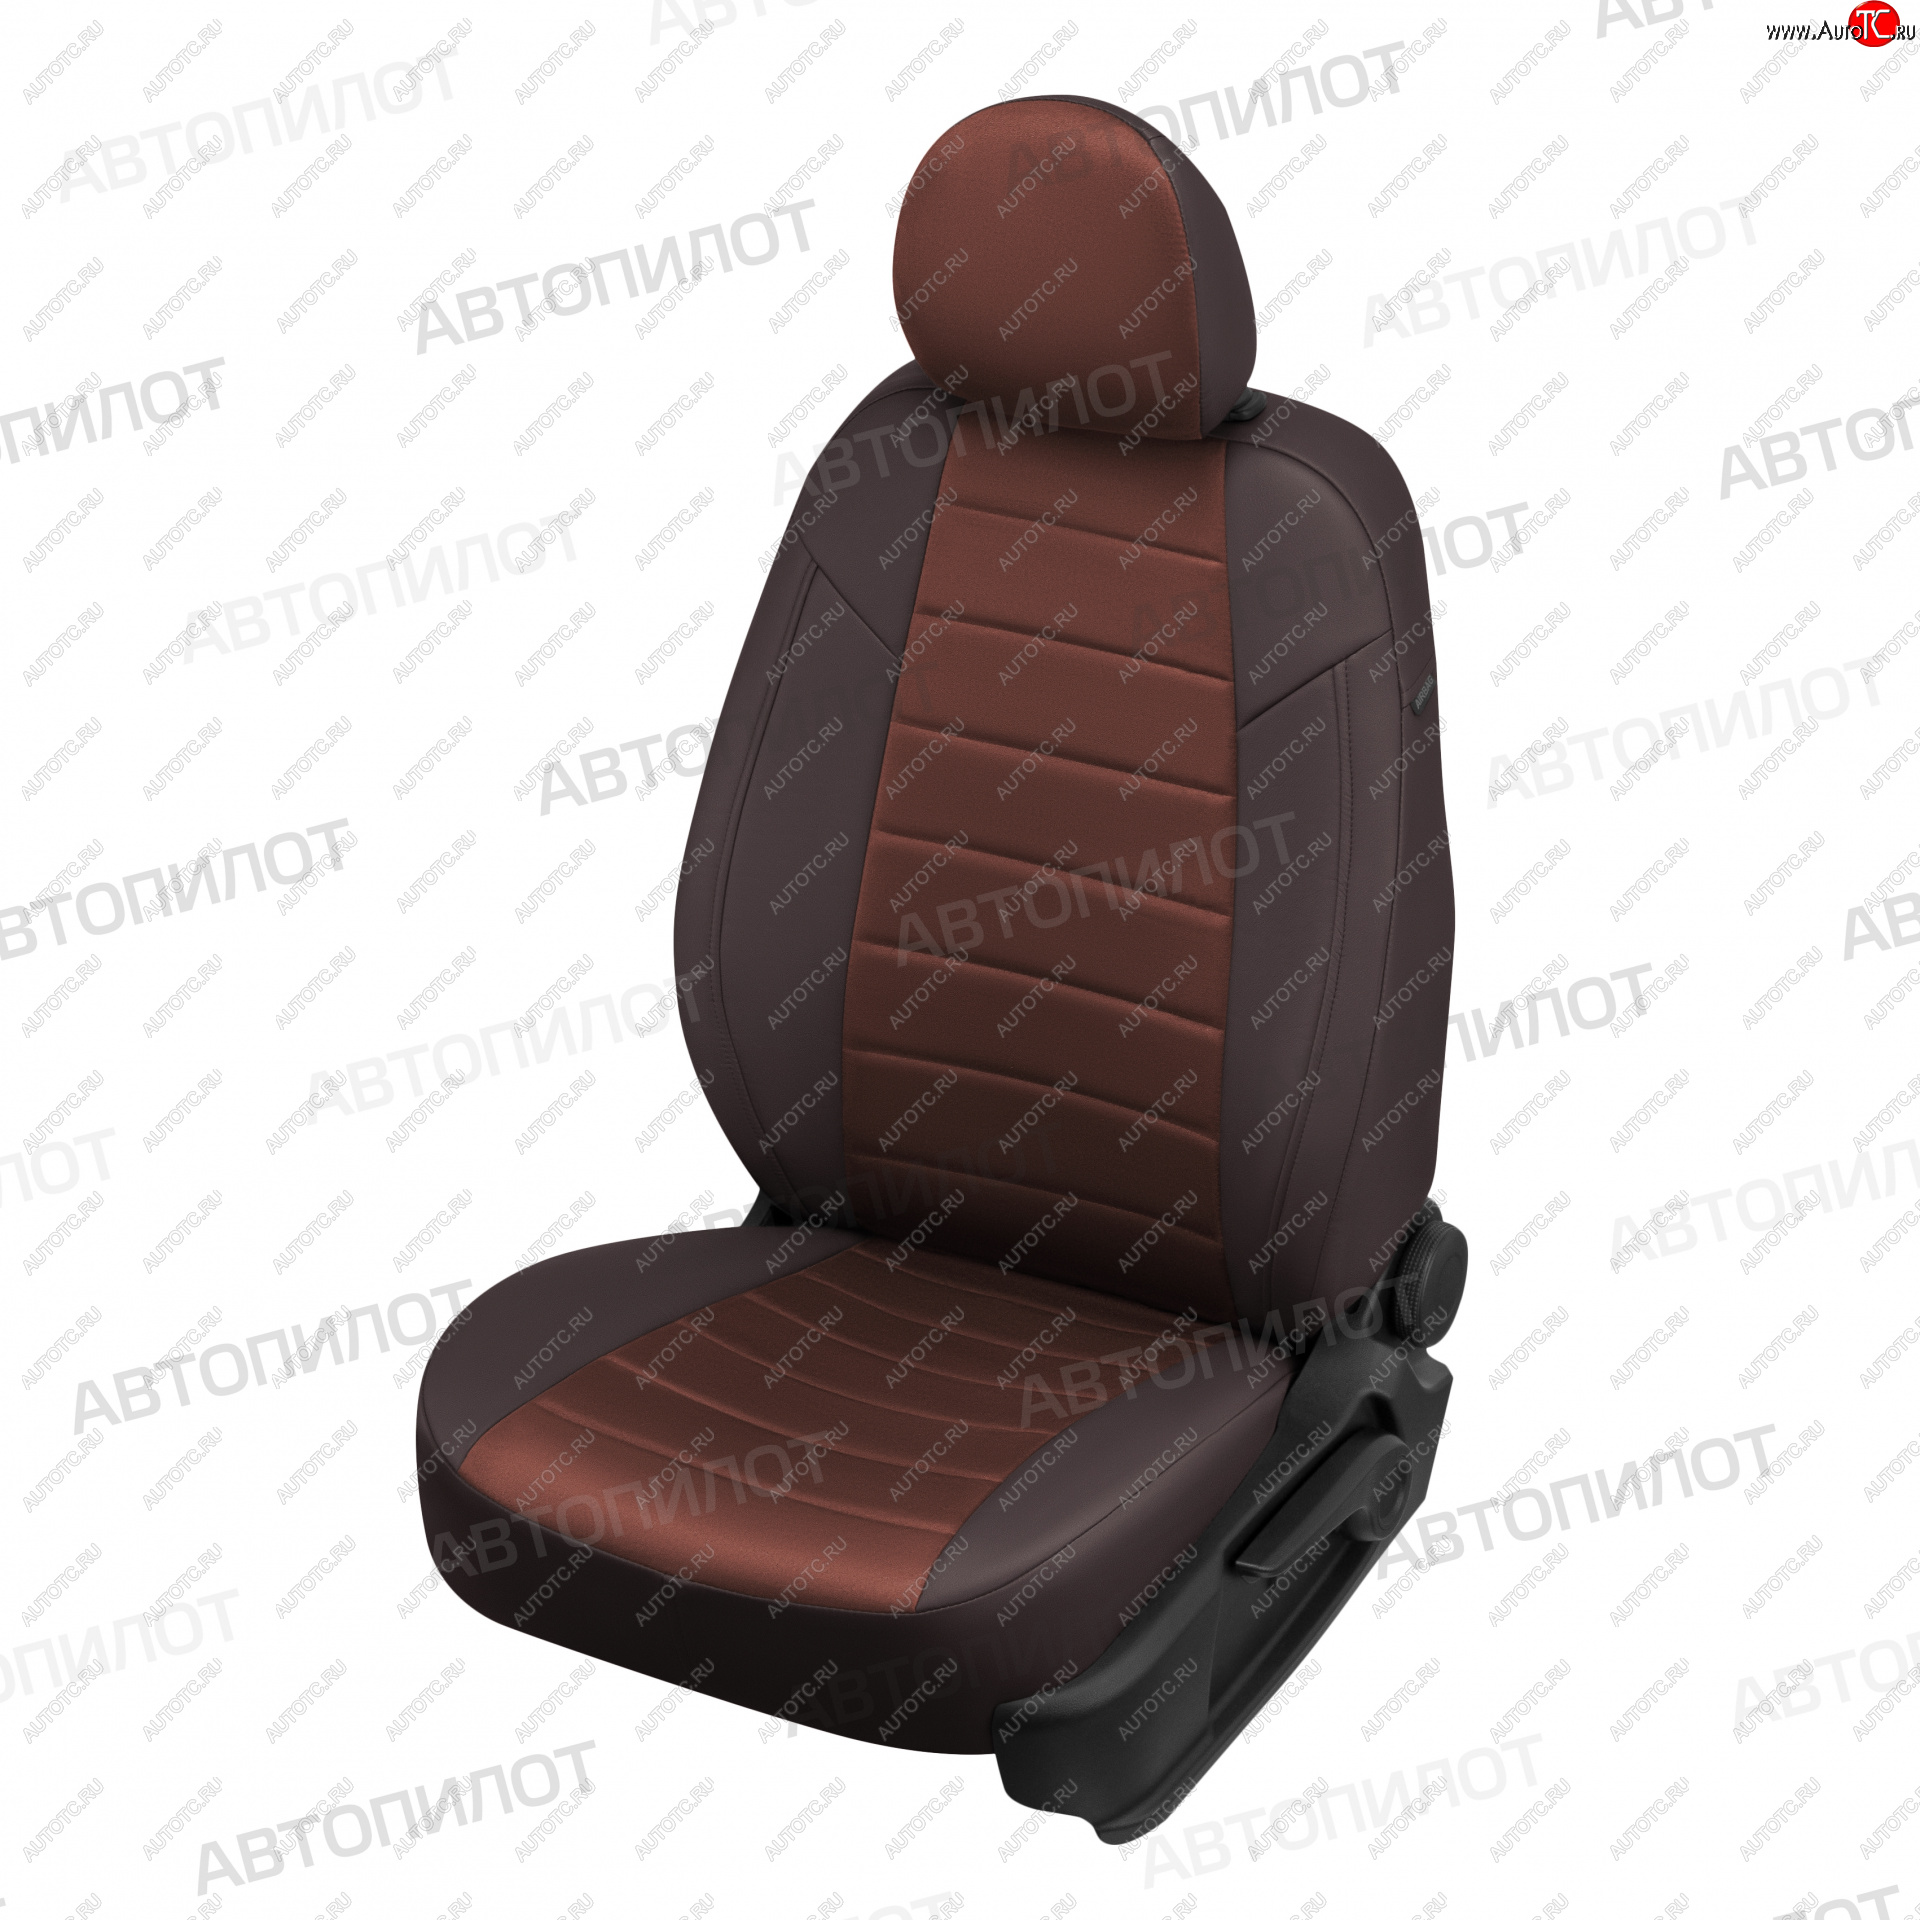 13 449 р. Чехлы сидений (экокожа/алькантара) Автопилот  KIA Sportage  3 SL (2010-2016) (шоколад)